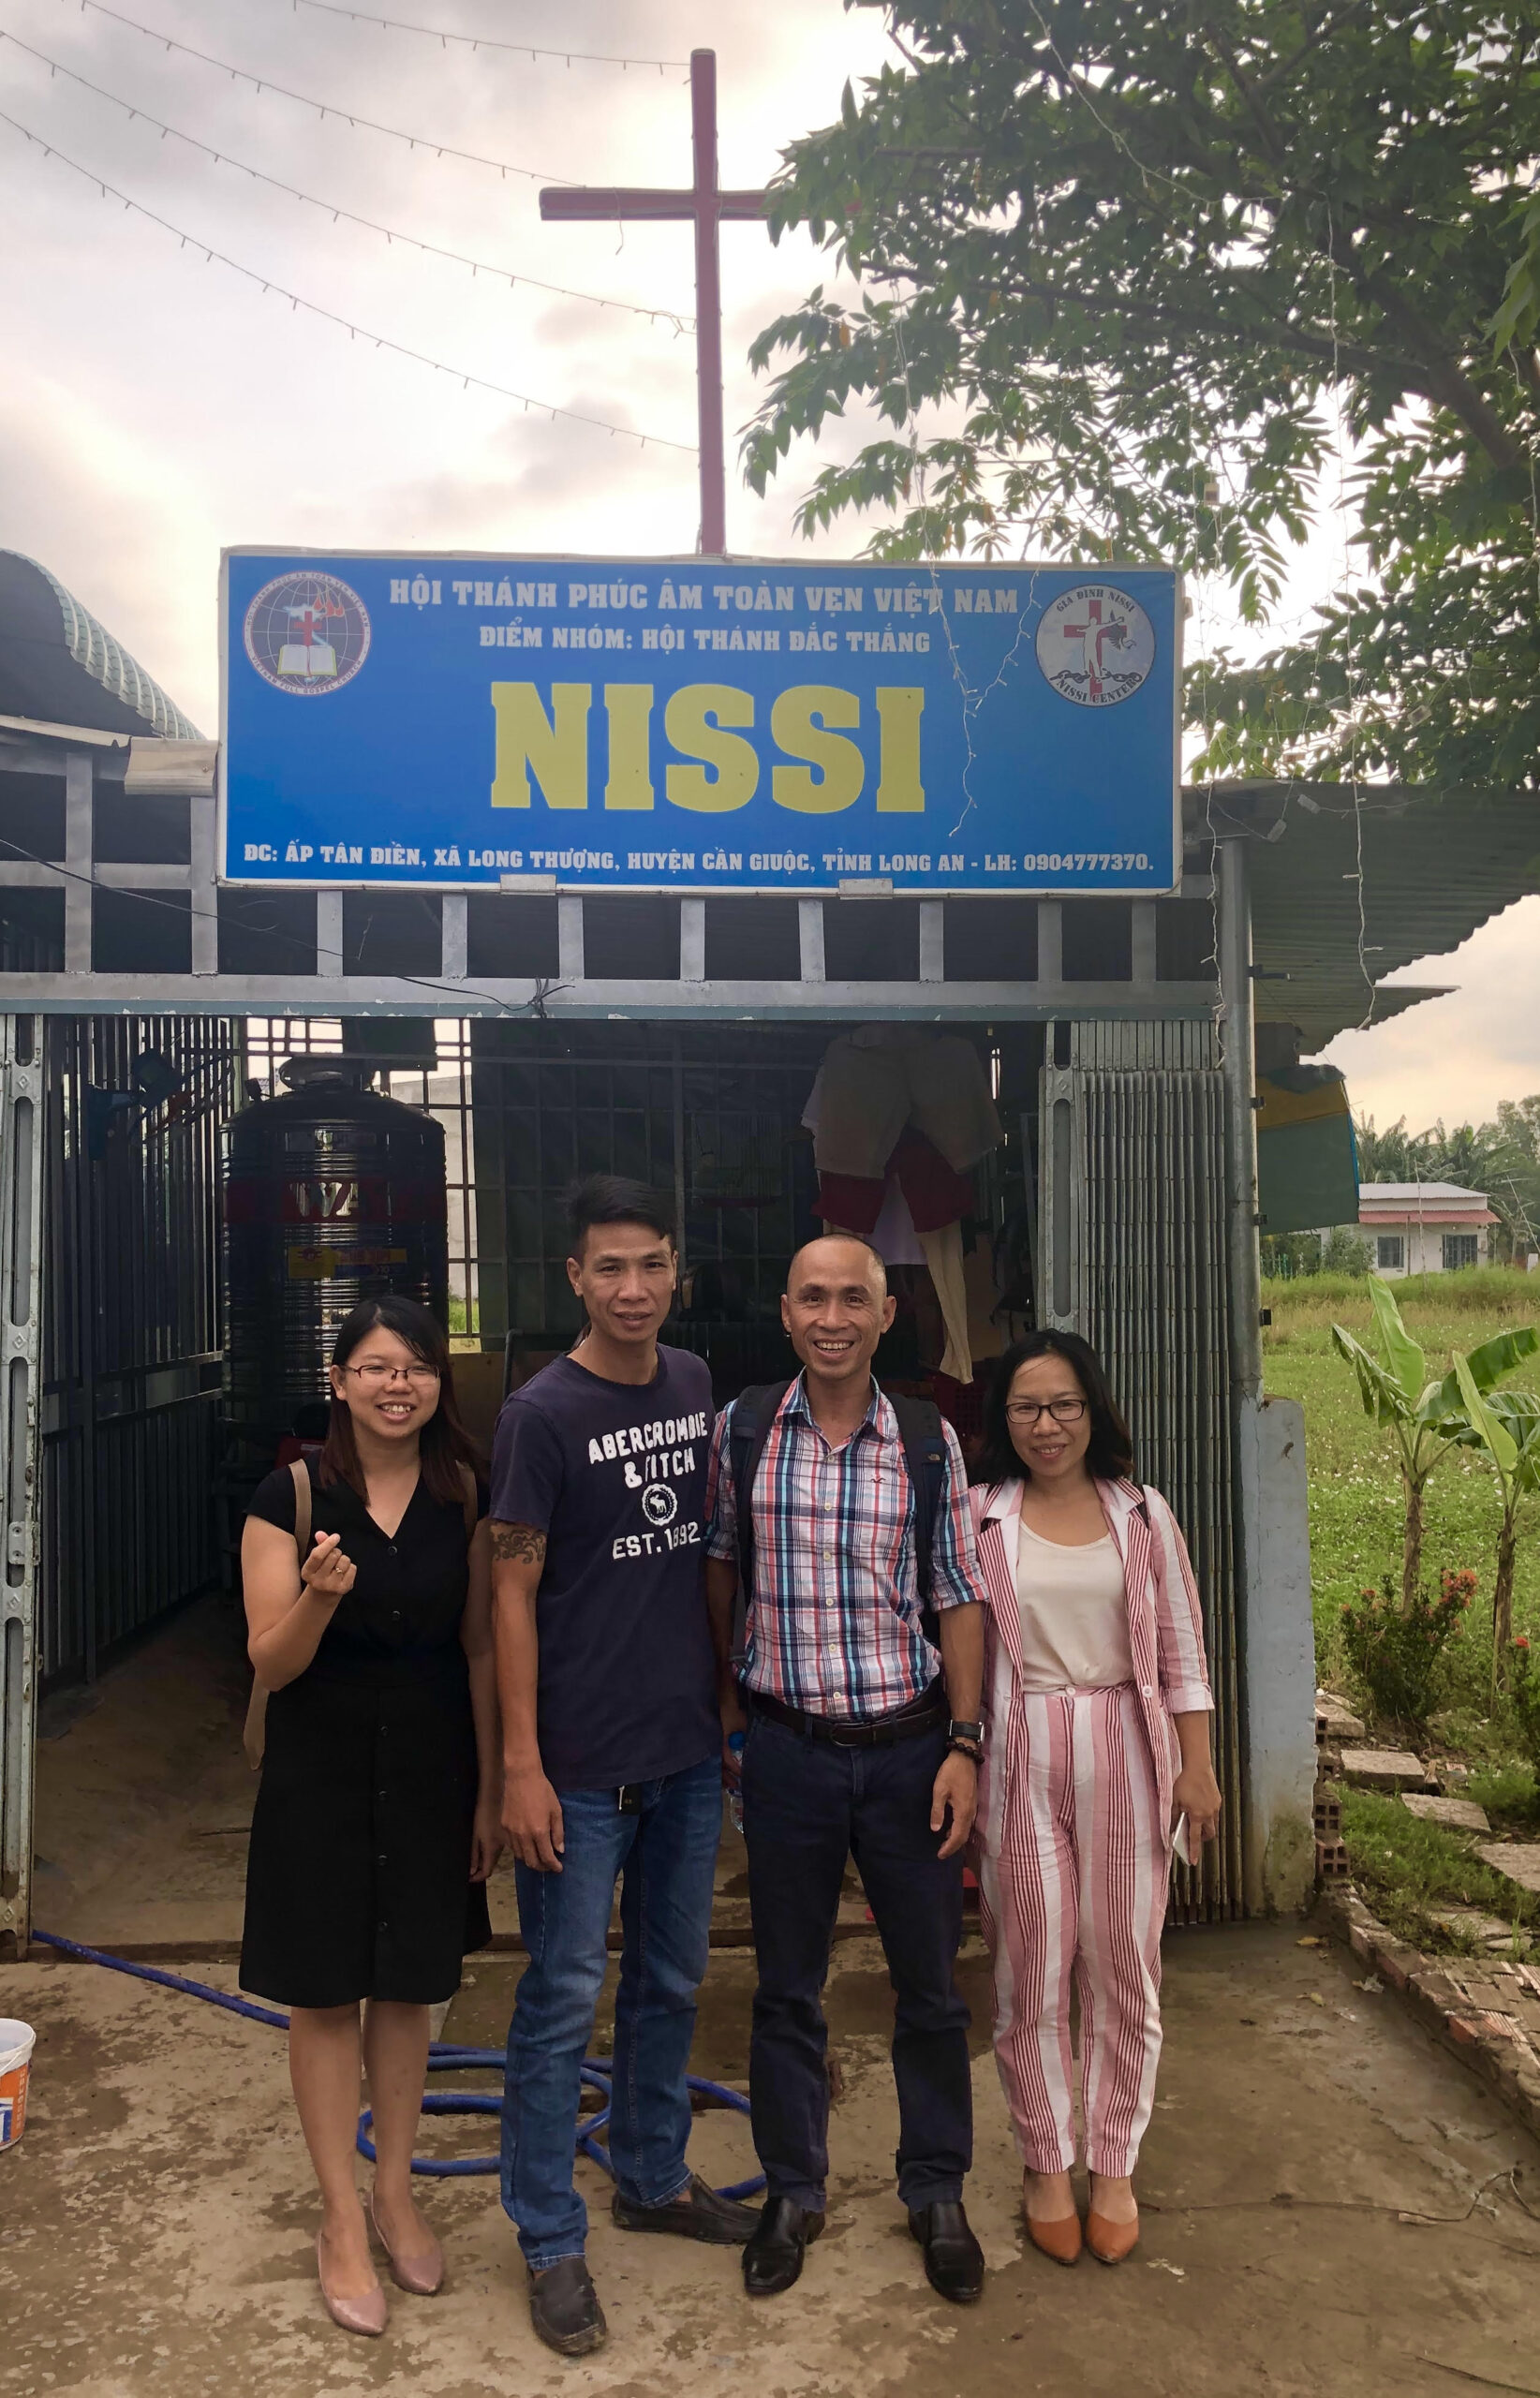 UMP Vietnam HIV ATTC's members visited NISSI